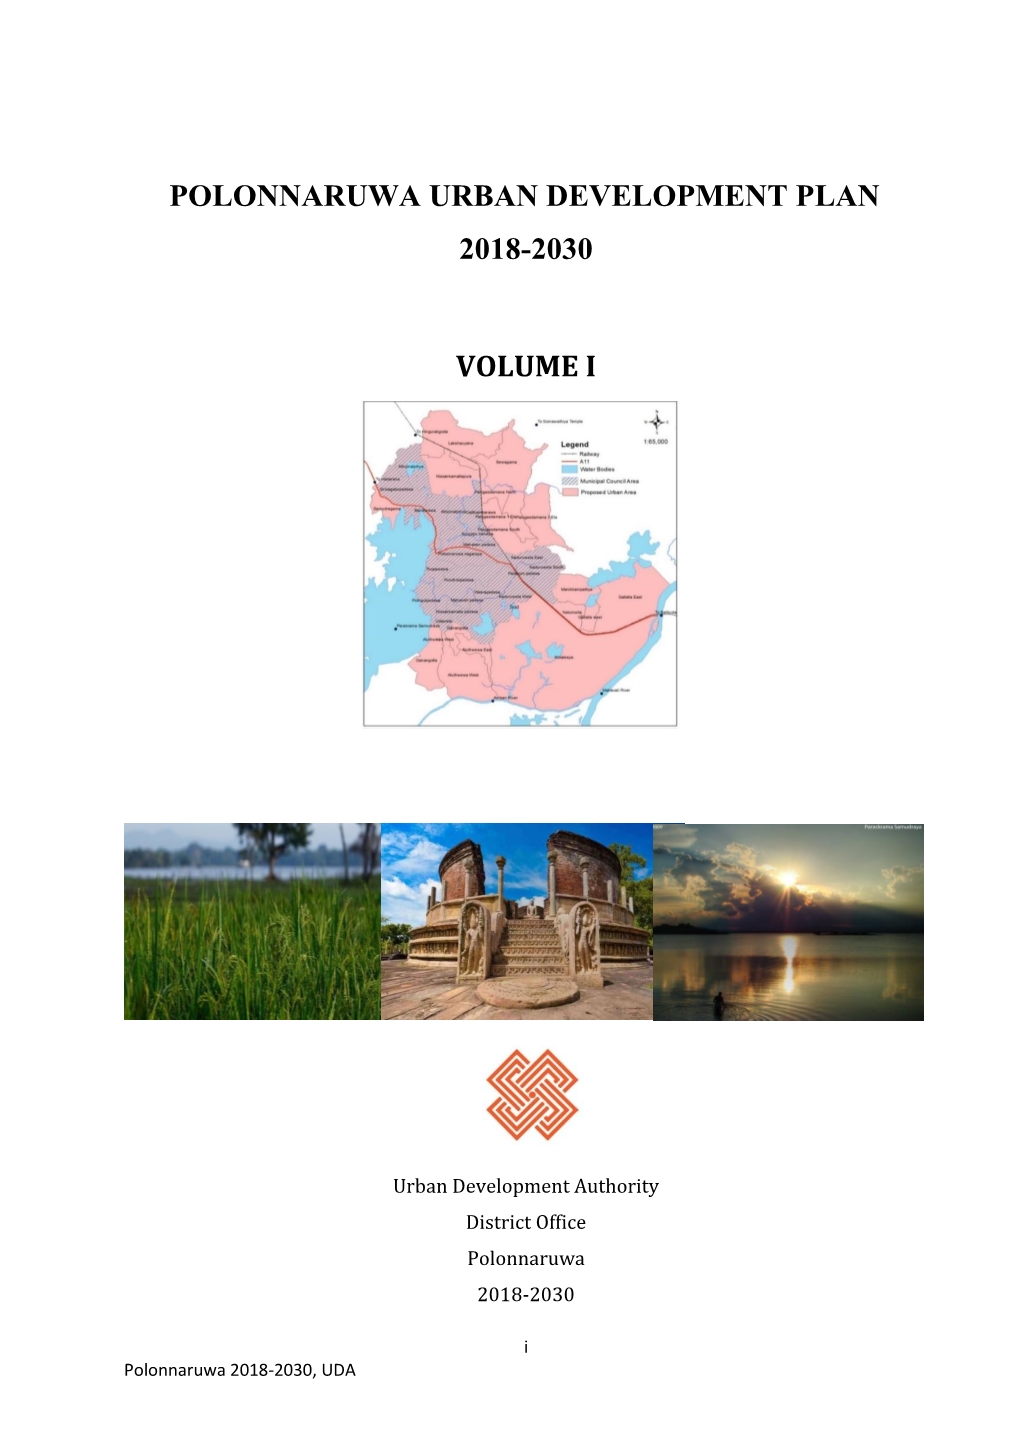 Polonnaruwa Development Plan 2018-2030